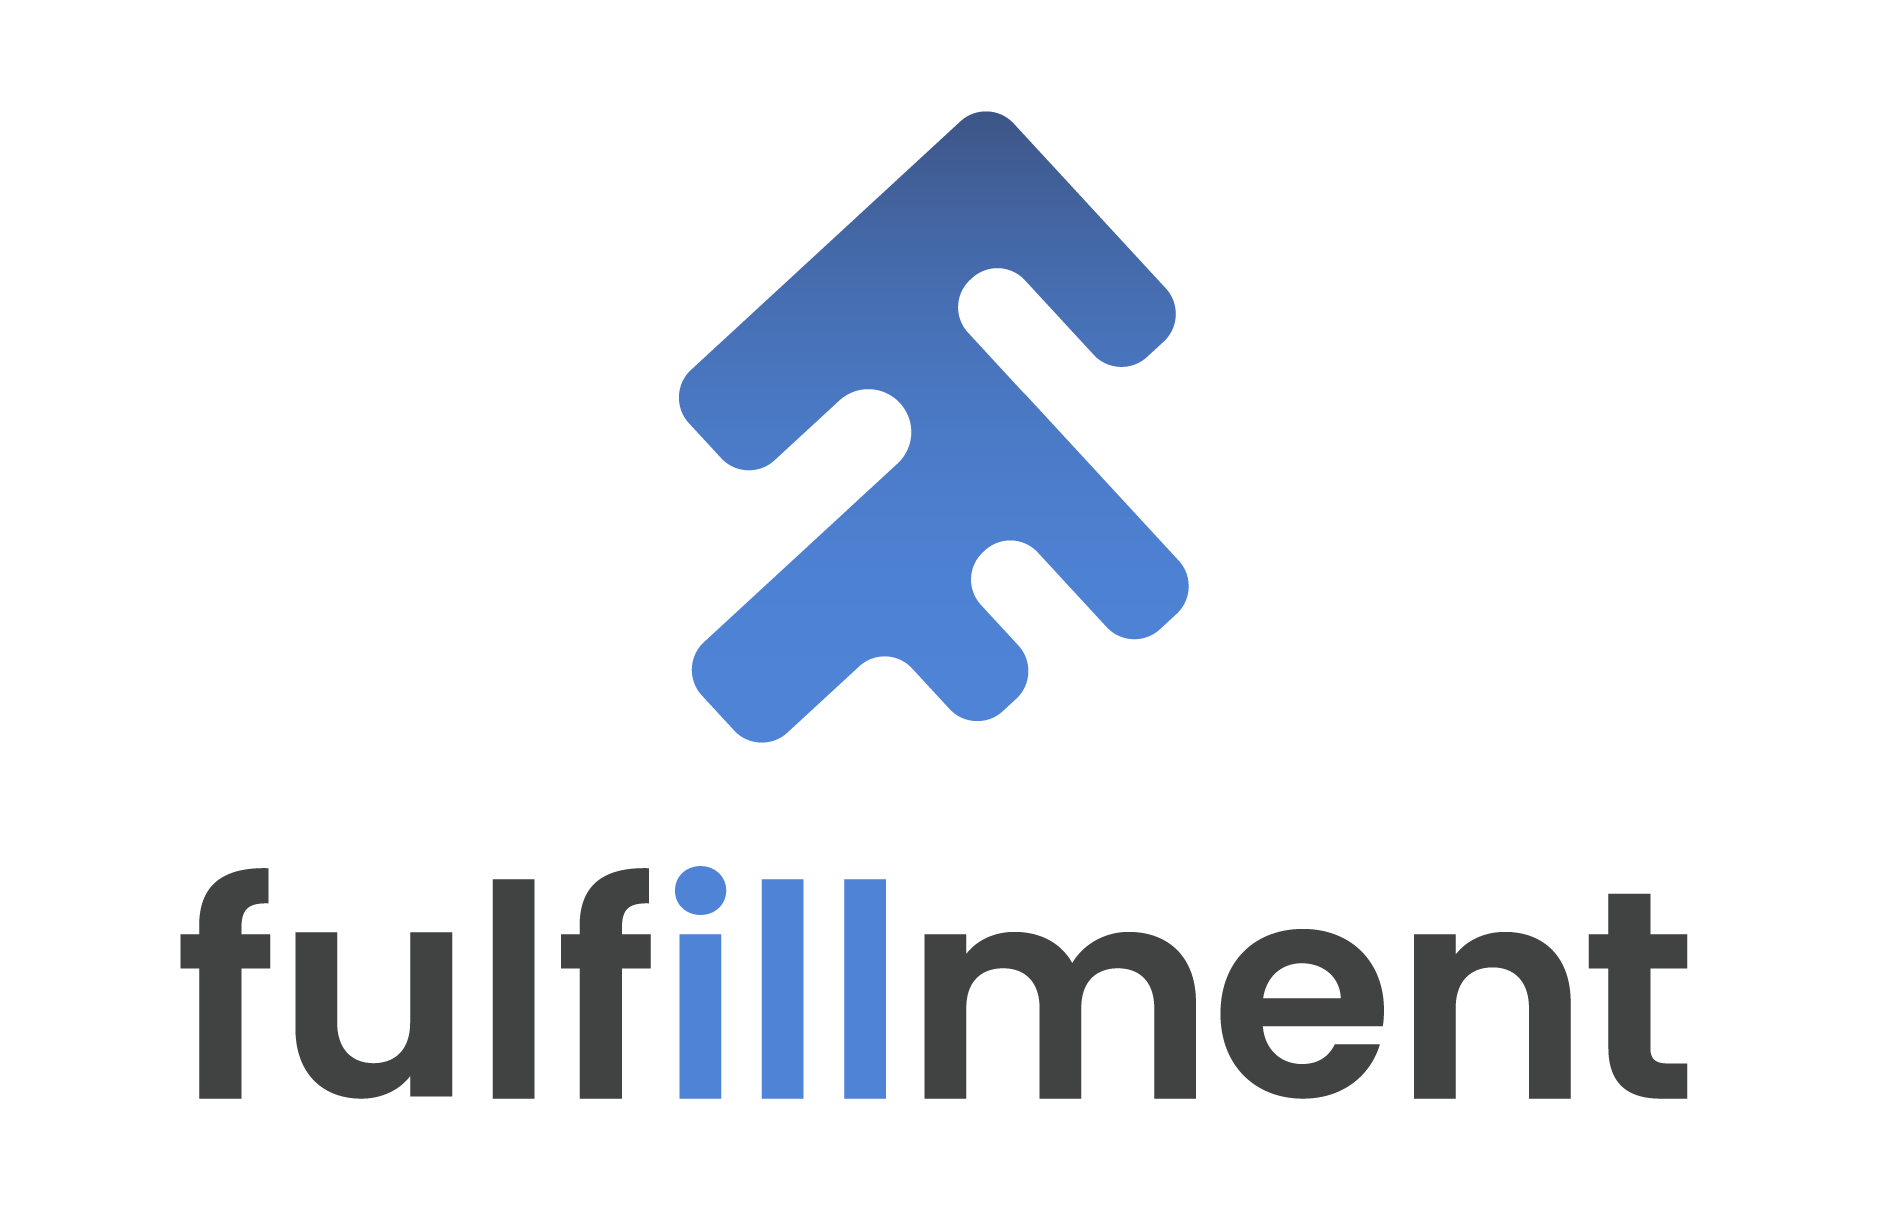 Fulfillment logo